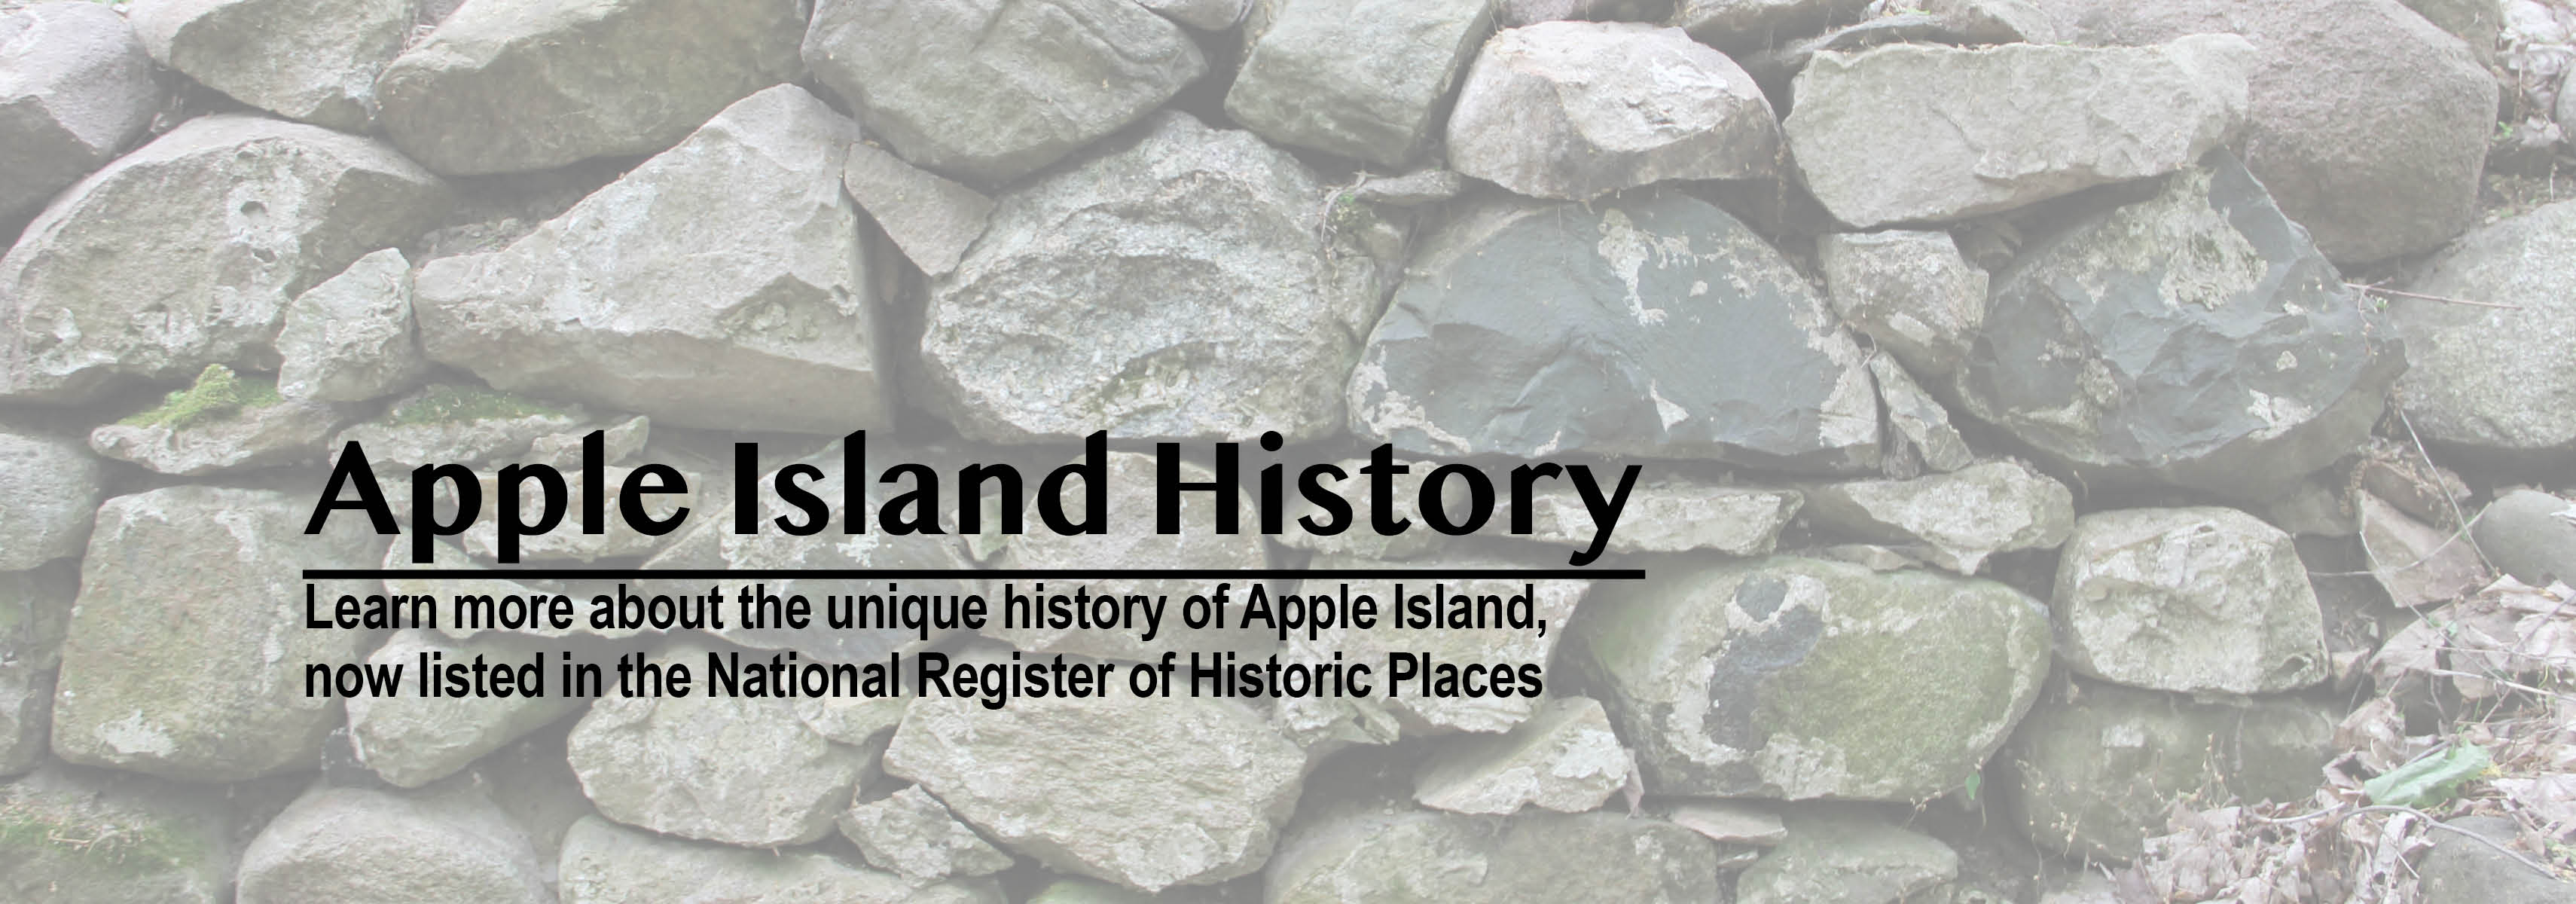 Apple Island History